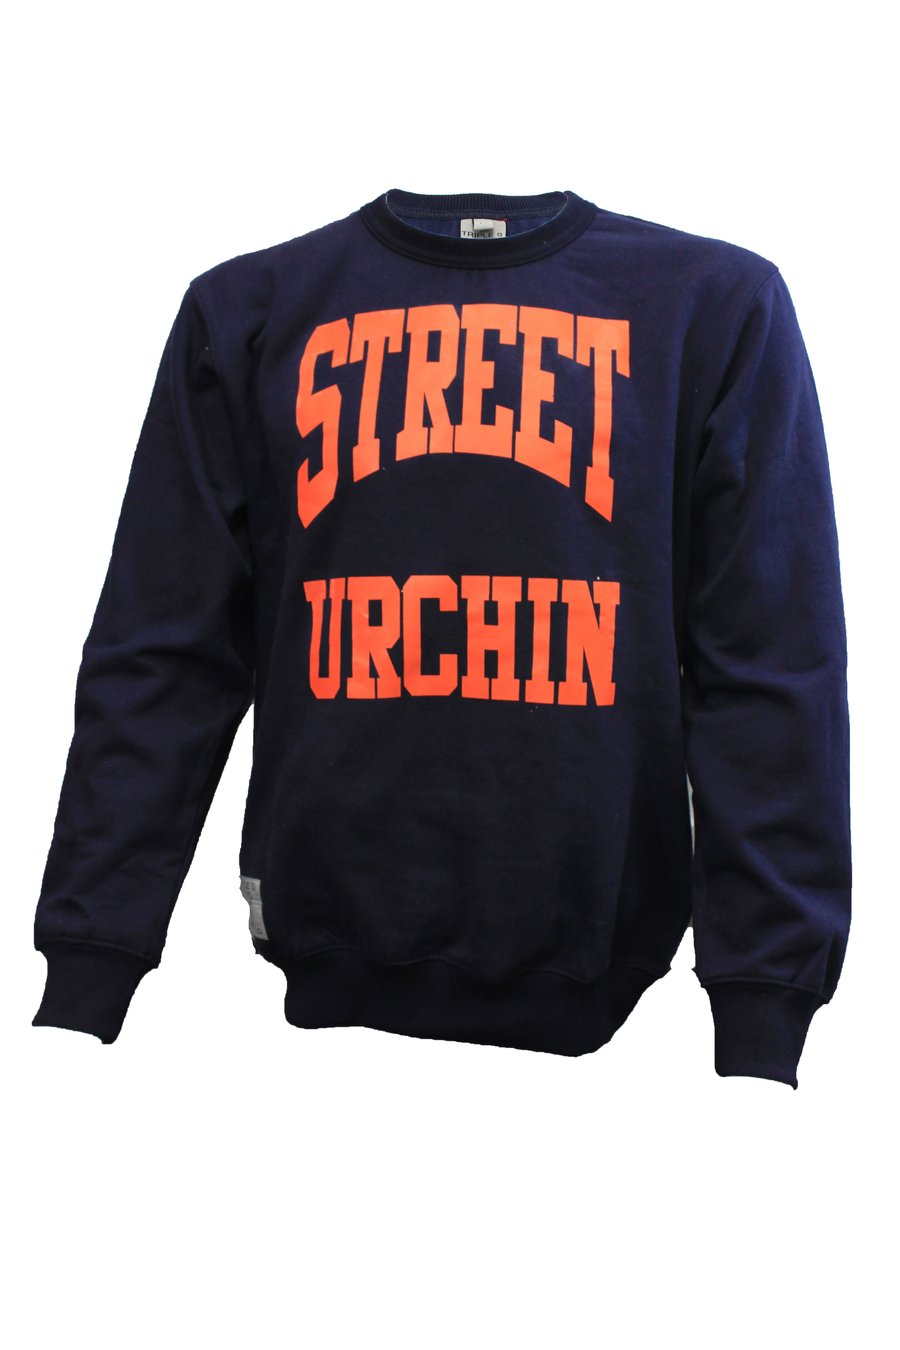 Image of Street urchin sweatshirt